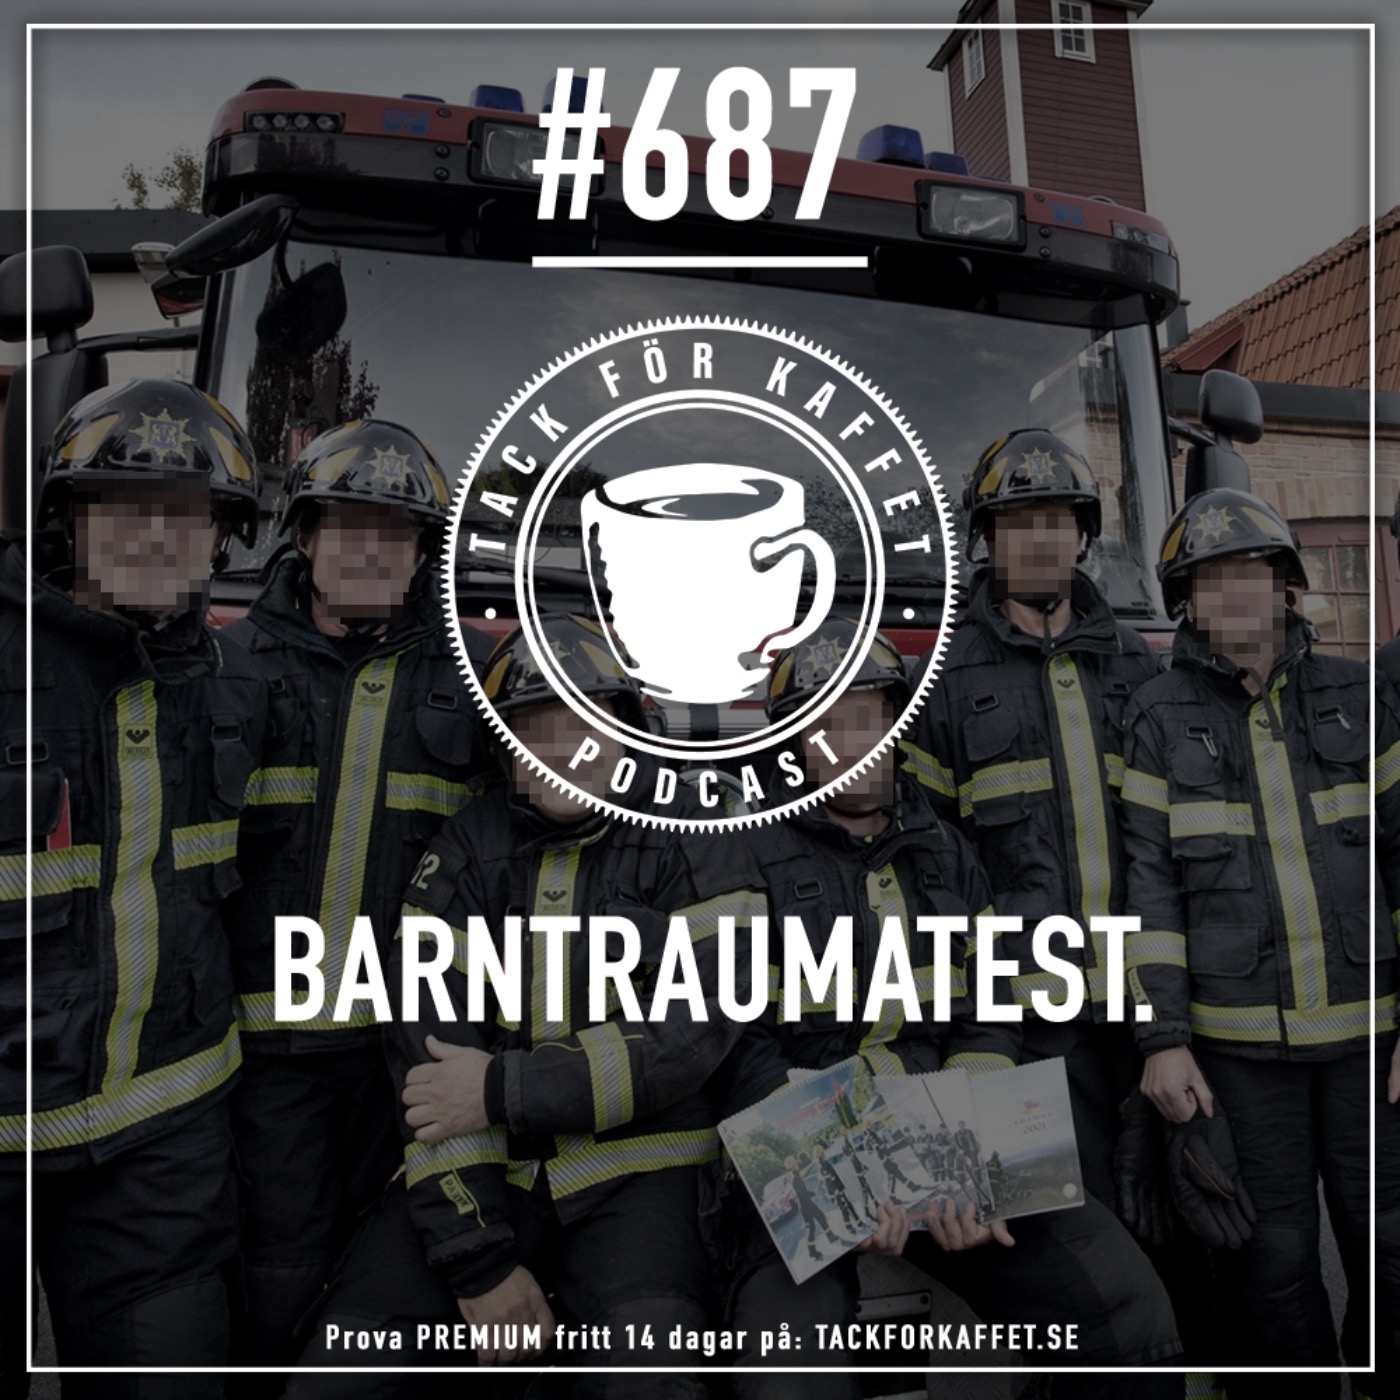 687. Barntraumatest.